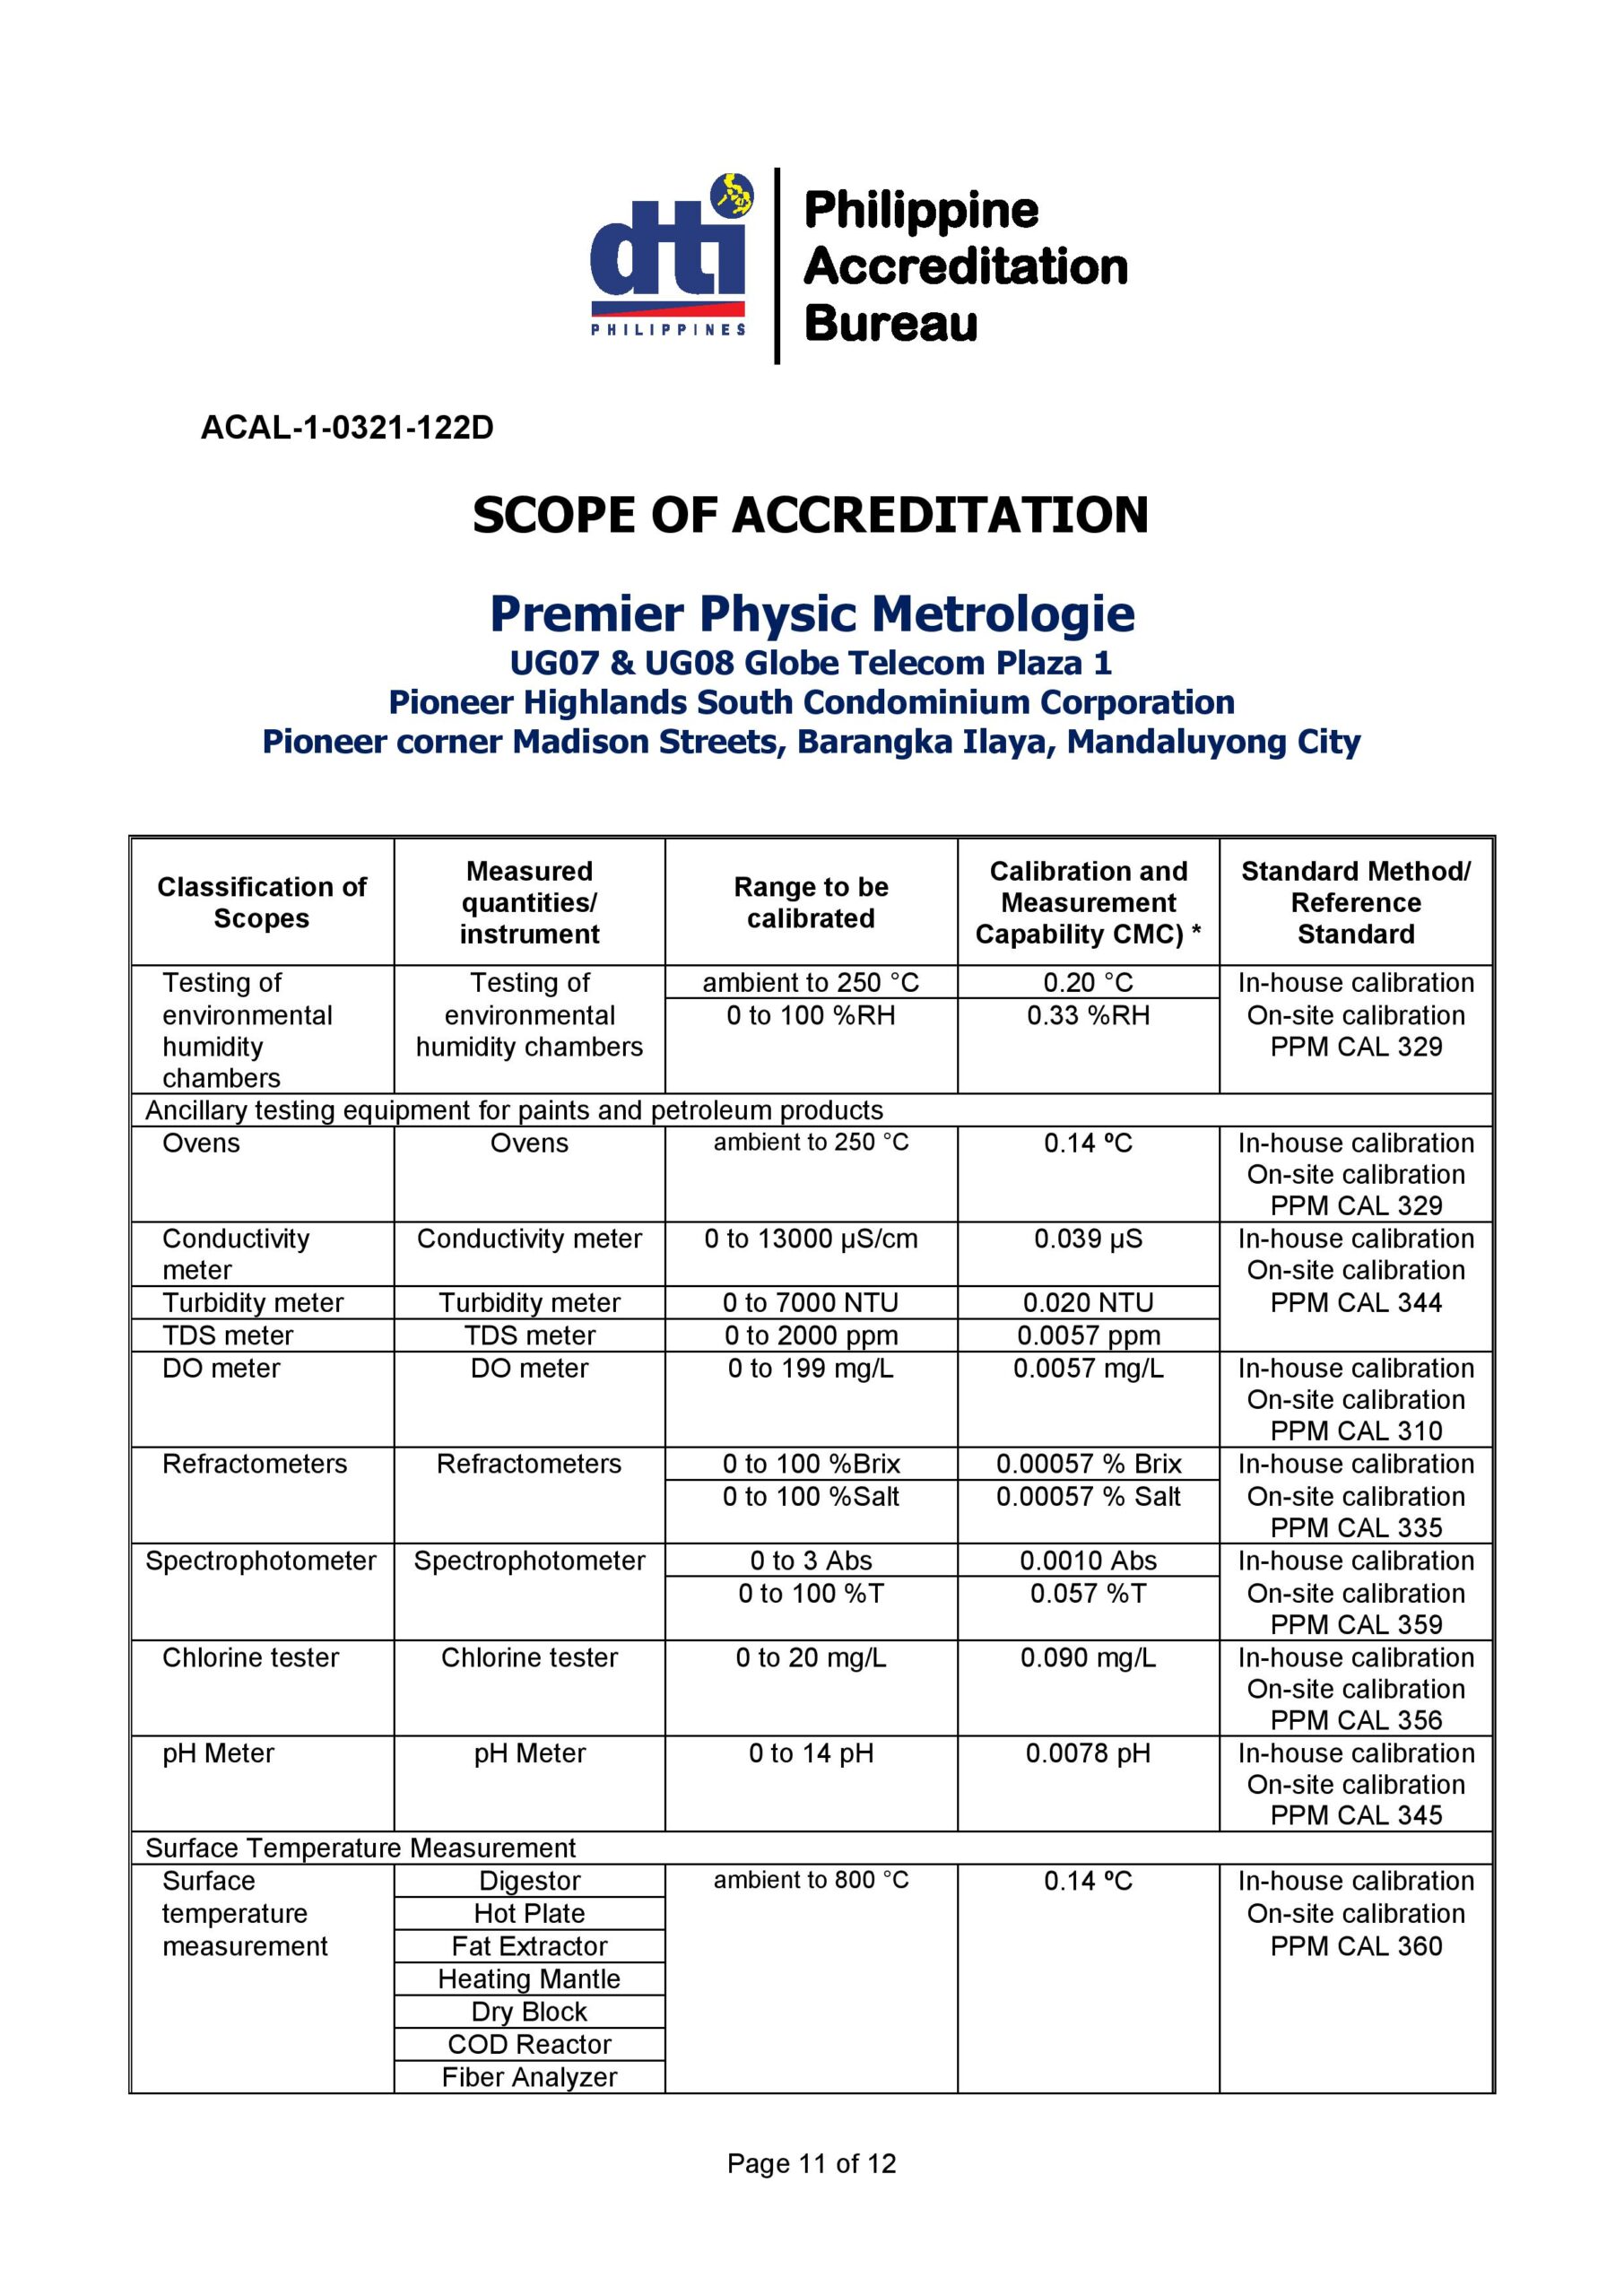 Premier Physic Metrologie - Scope of Accreditation 11